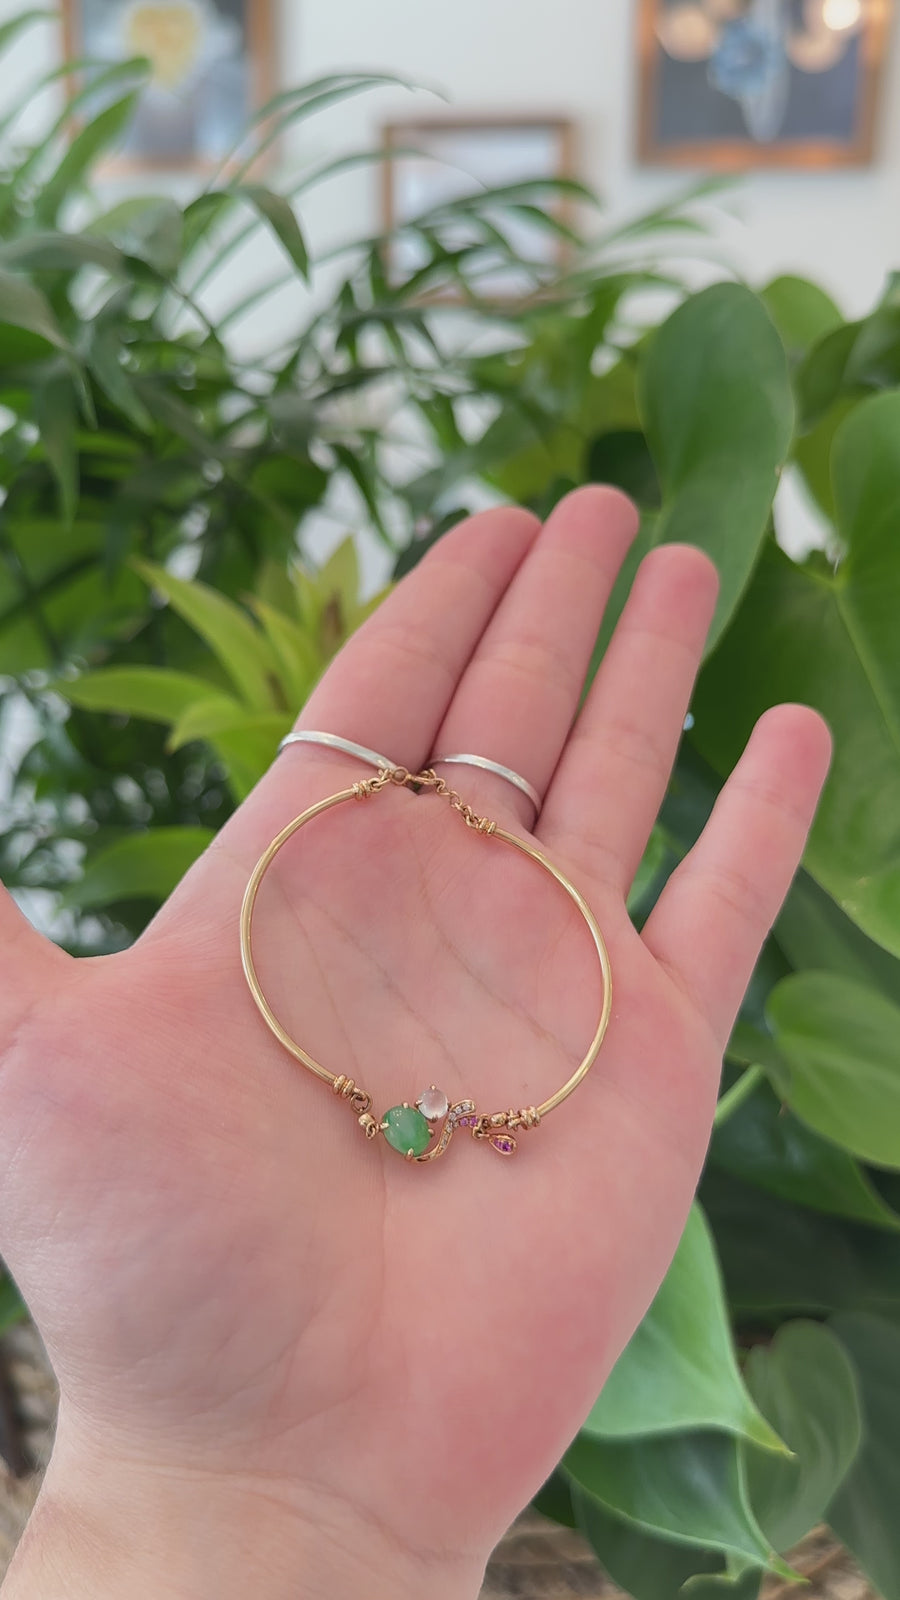 18k Rose Gold "Morning Glory" Half Bracelet Bangle with Green Imperial Jade & Diamonds